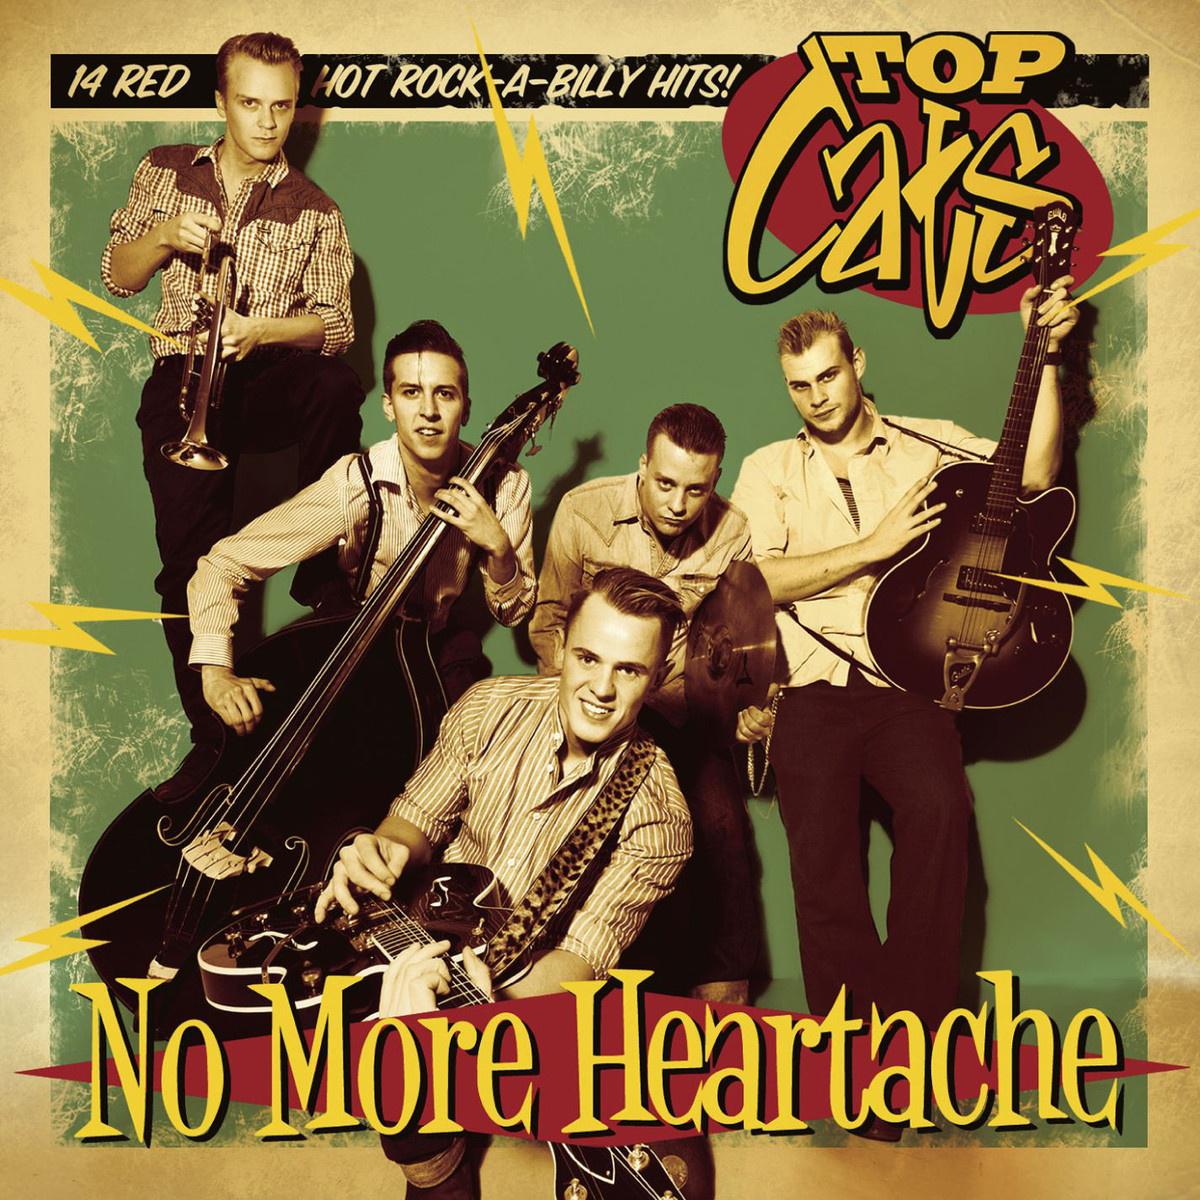 Top Cats - Heartache (Album Version)